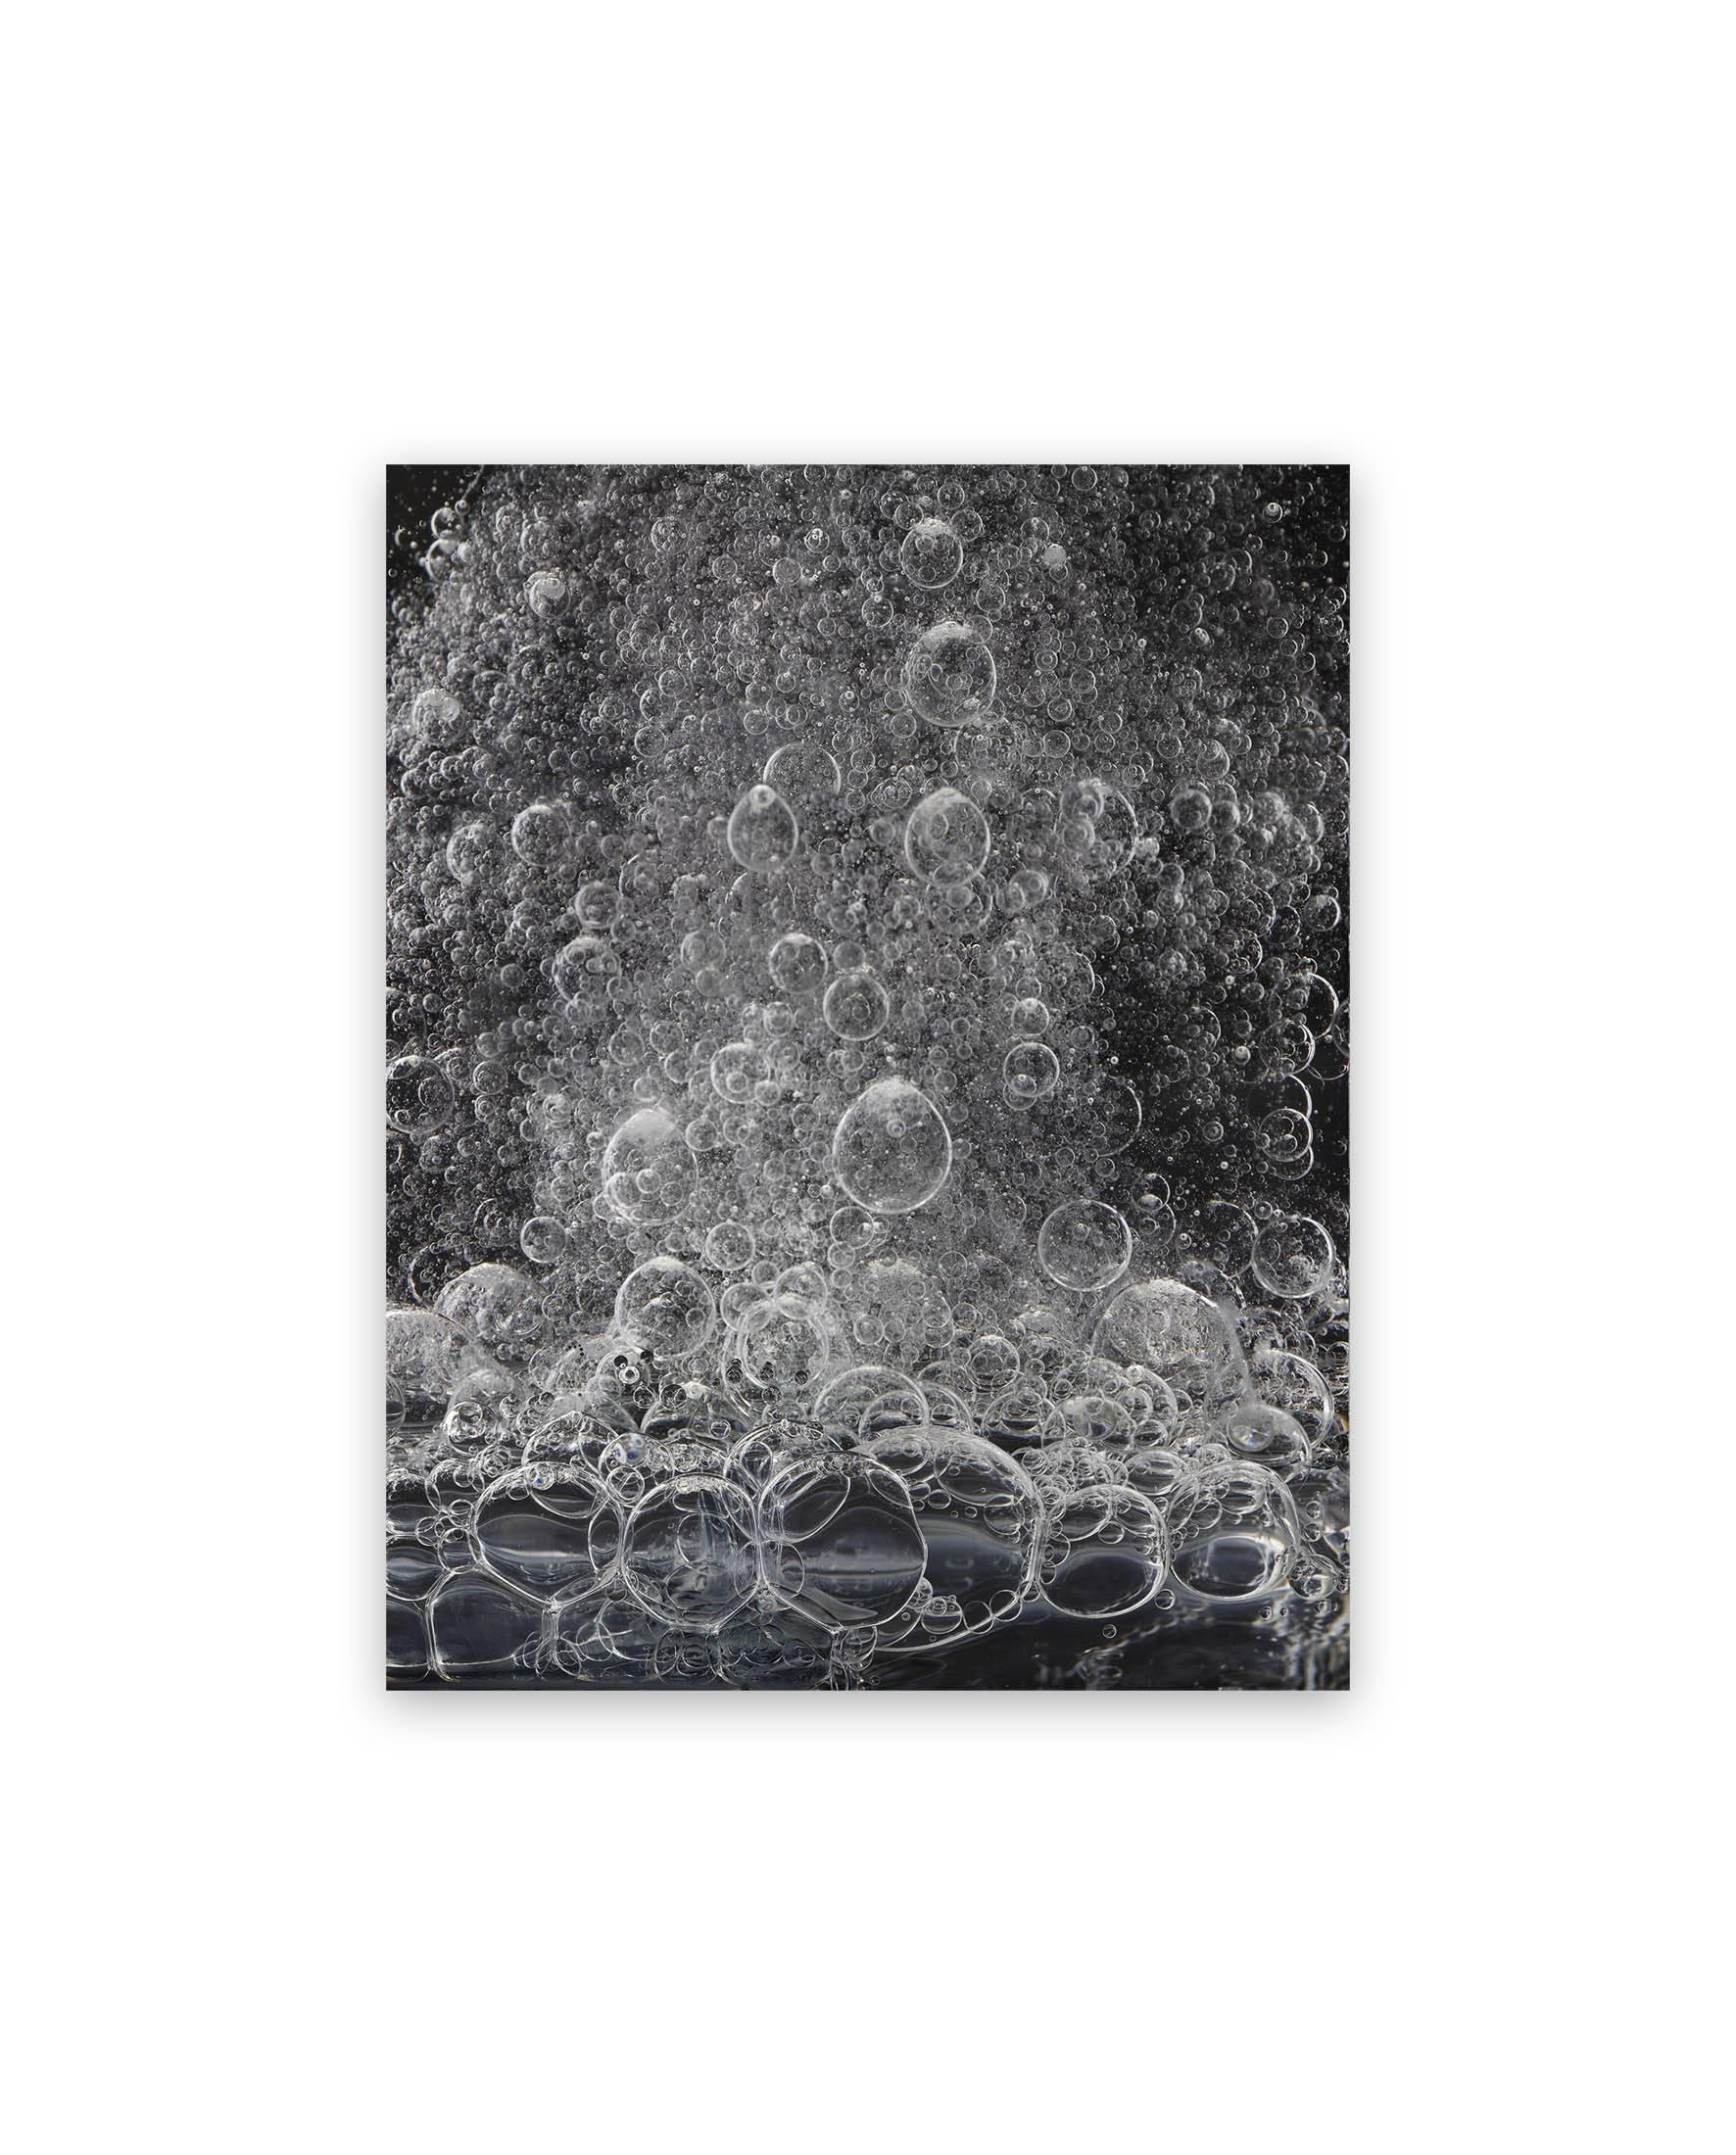 Seb Janiak Abstract Photograph - Gravity - Liquid 58 (Medium)